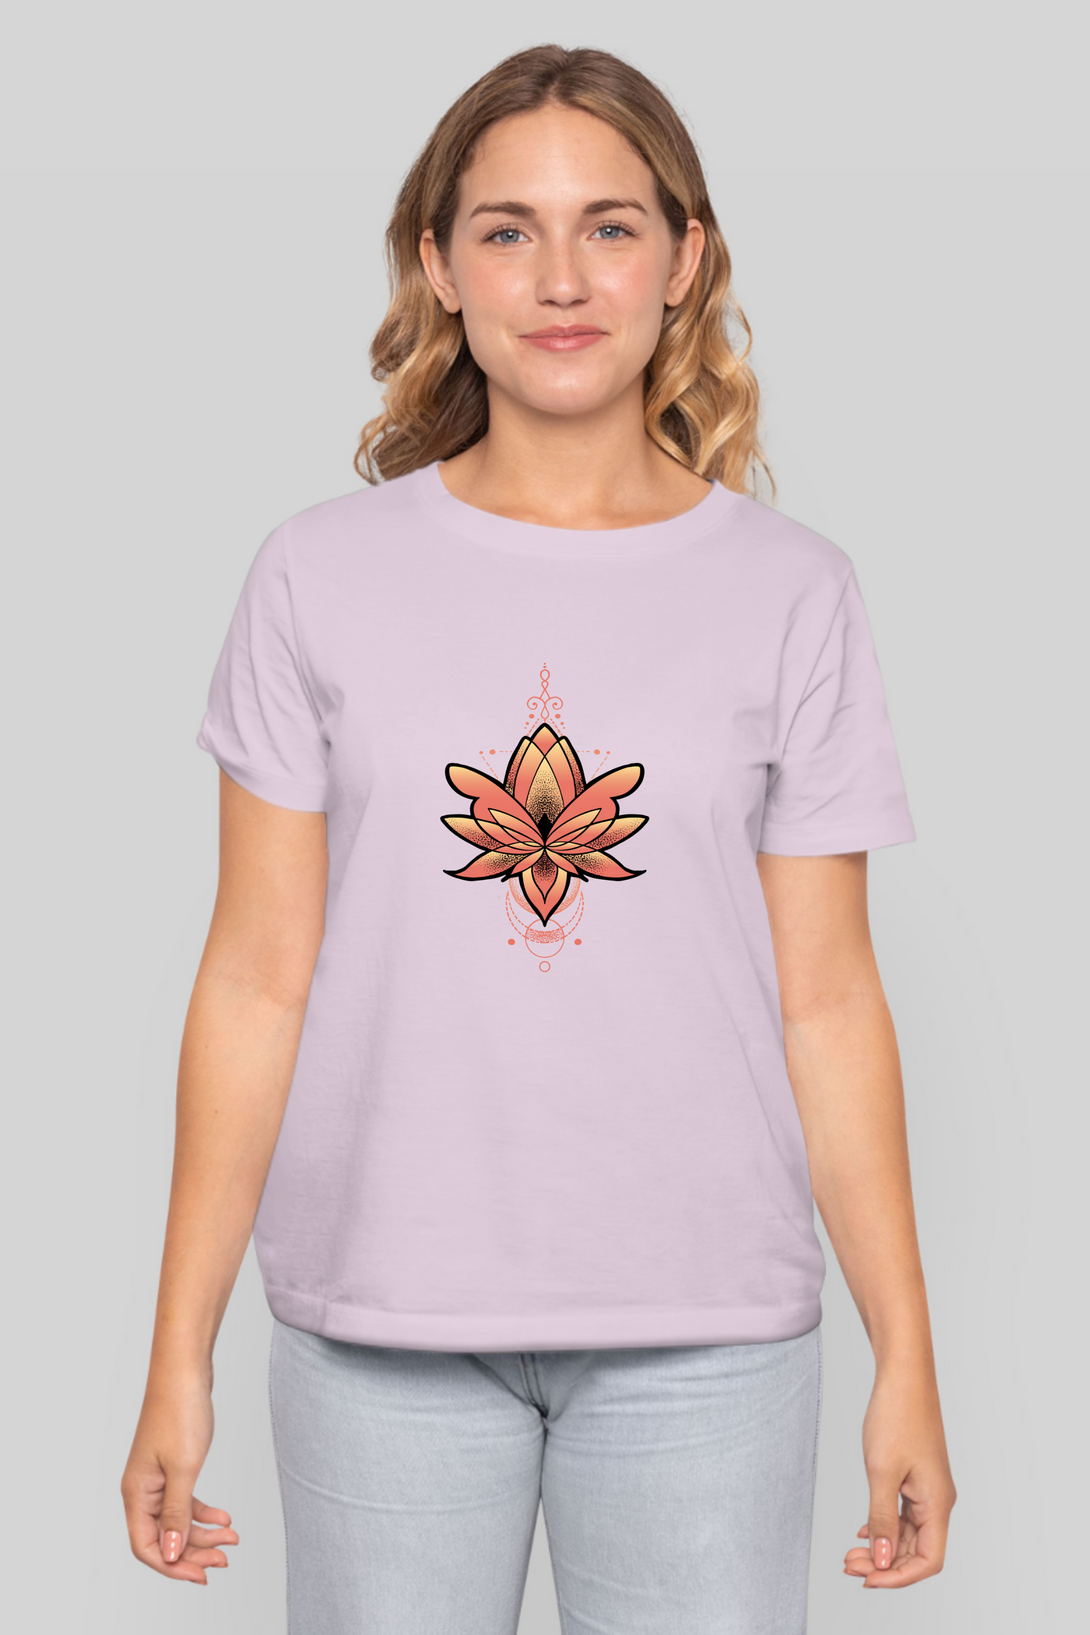 Geometric Lotus Printed T-Shirt For Women - WowWaves - 8